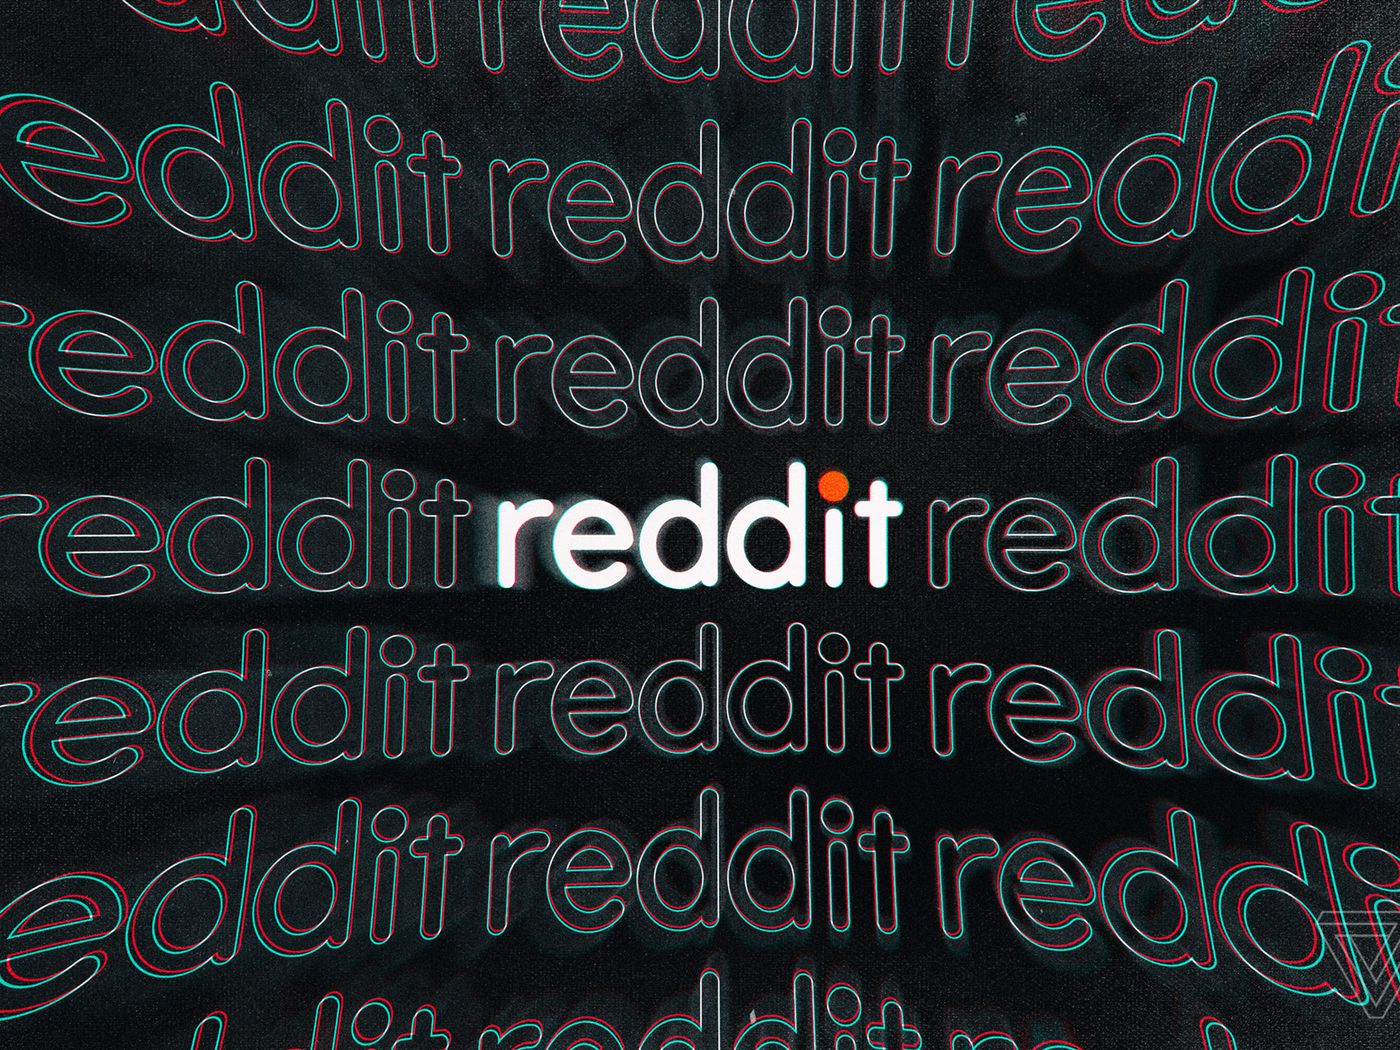 Straight Eight Reddit